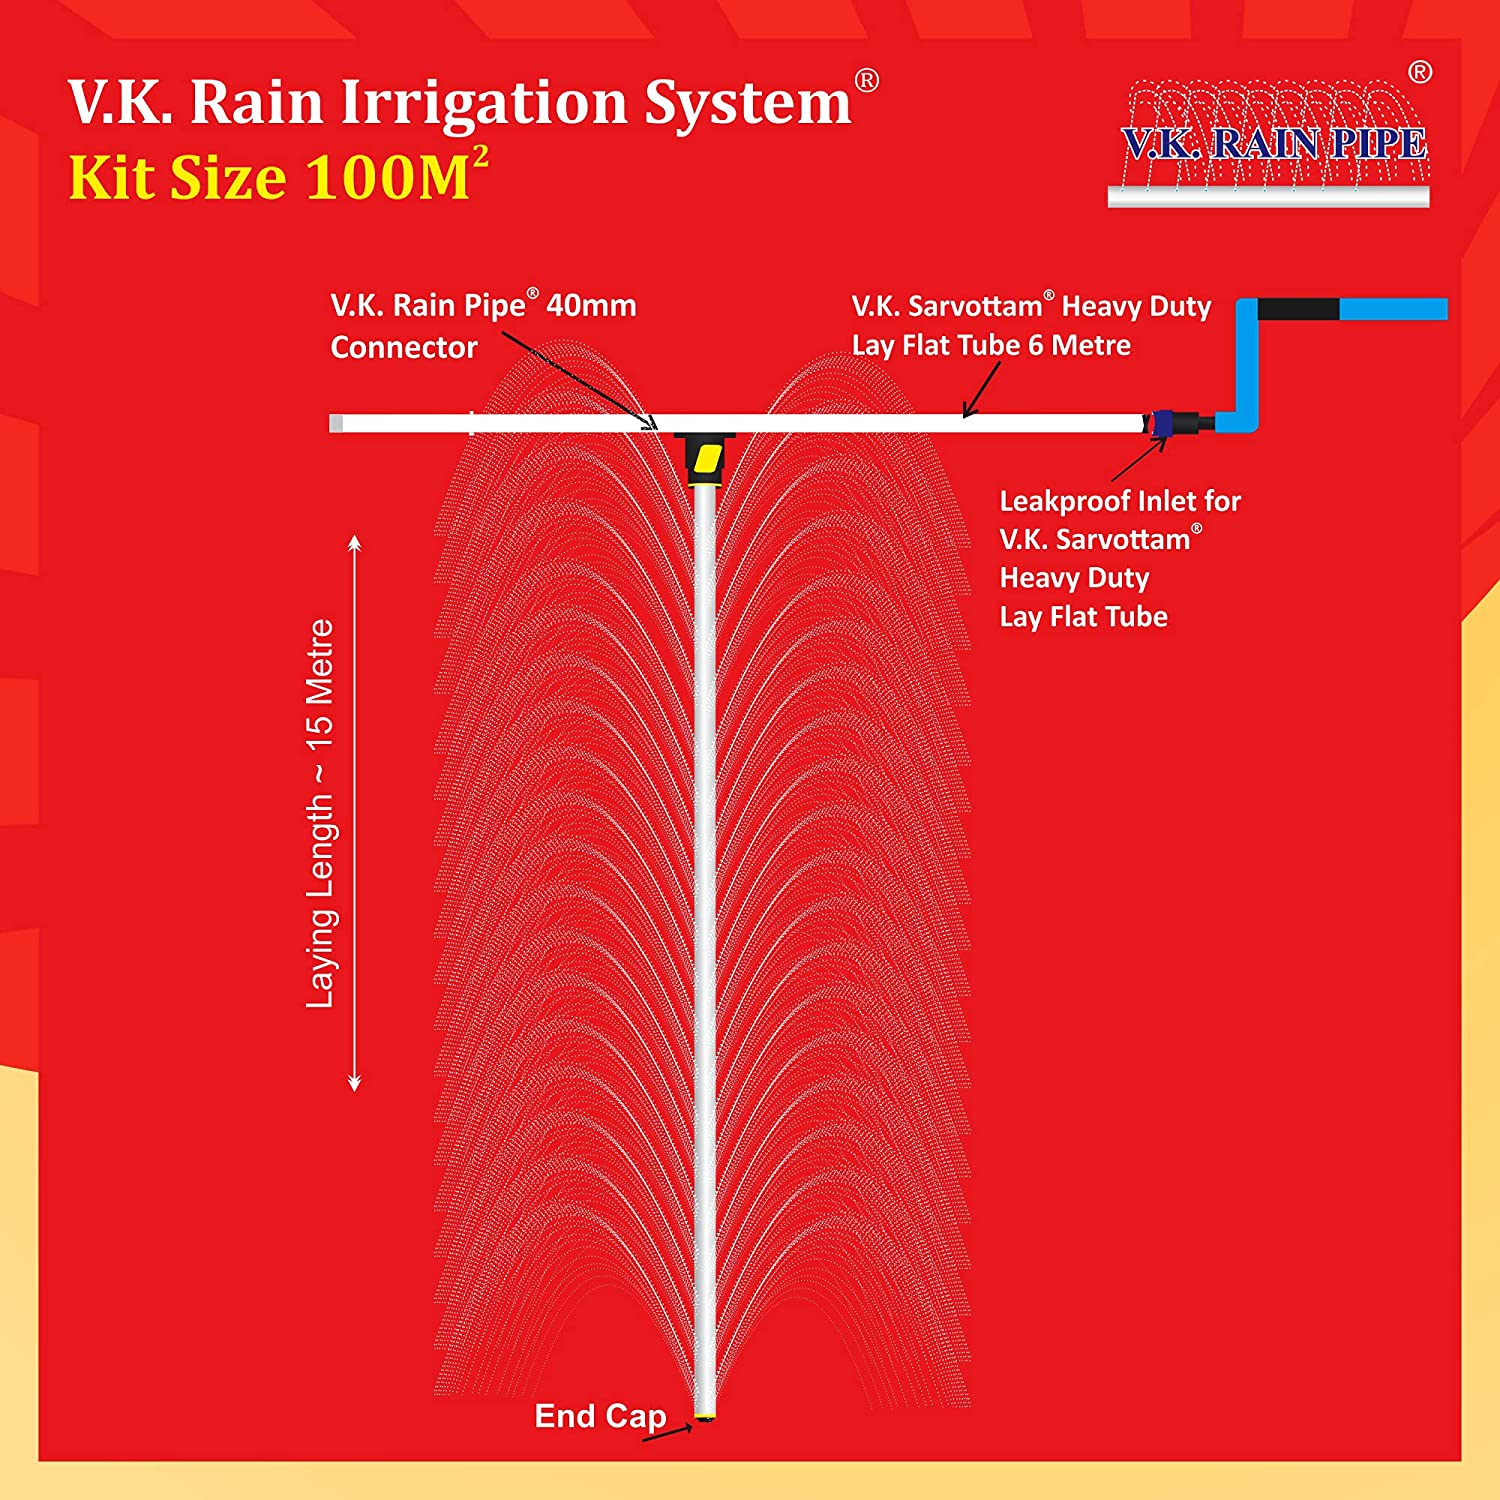 V.K. Rain Pipe Irrigation System